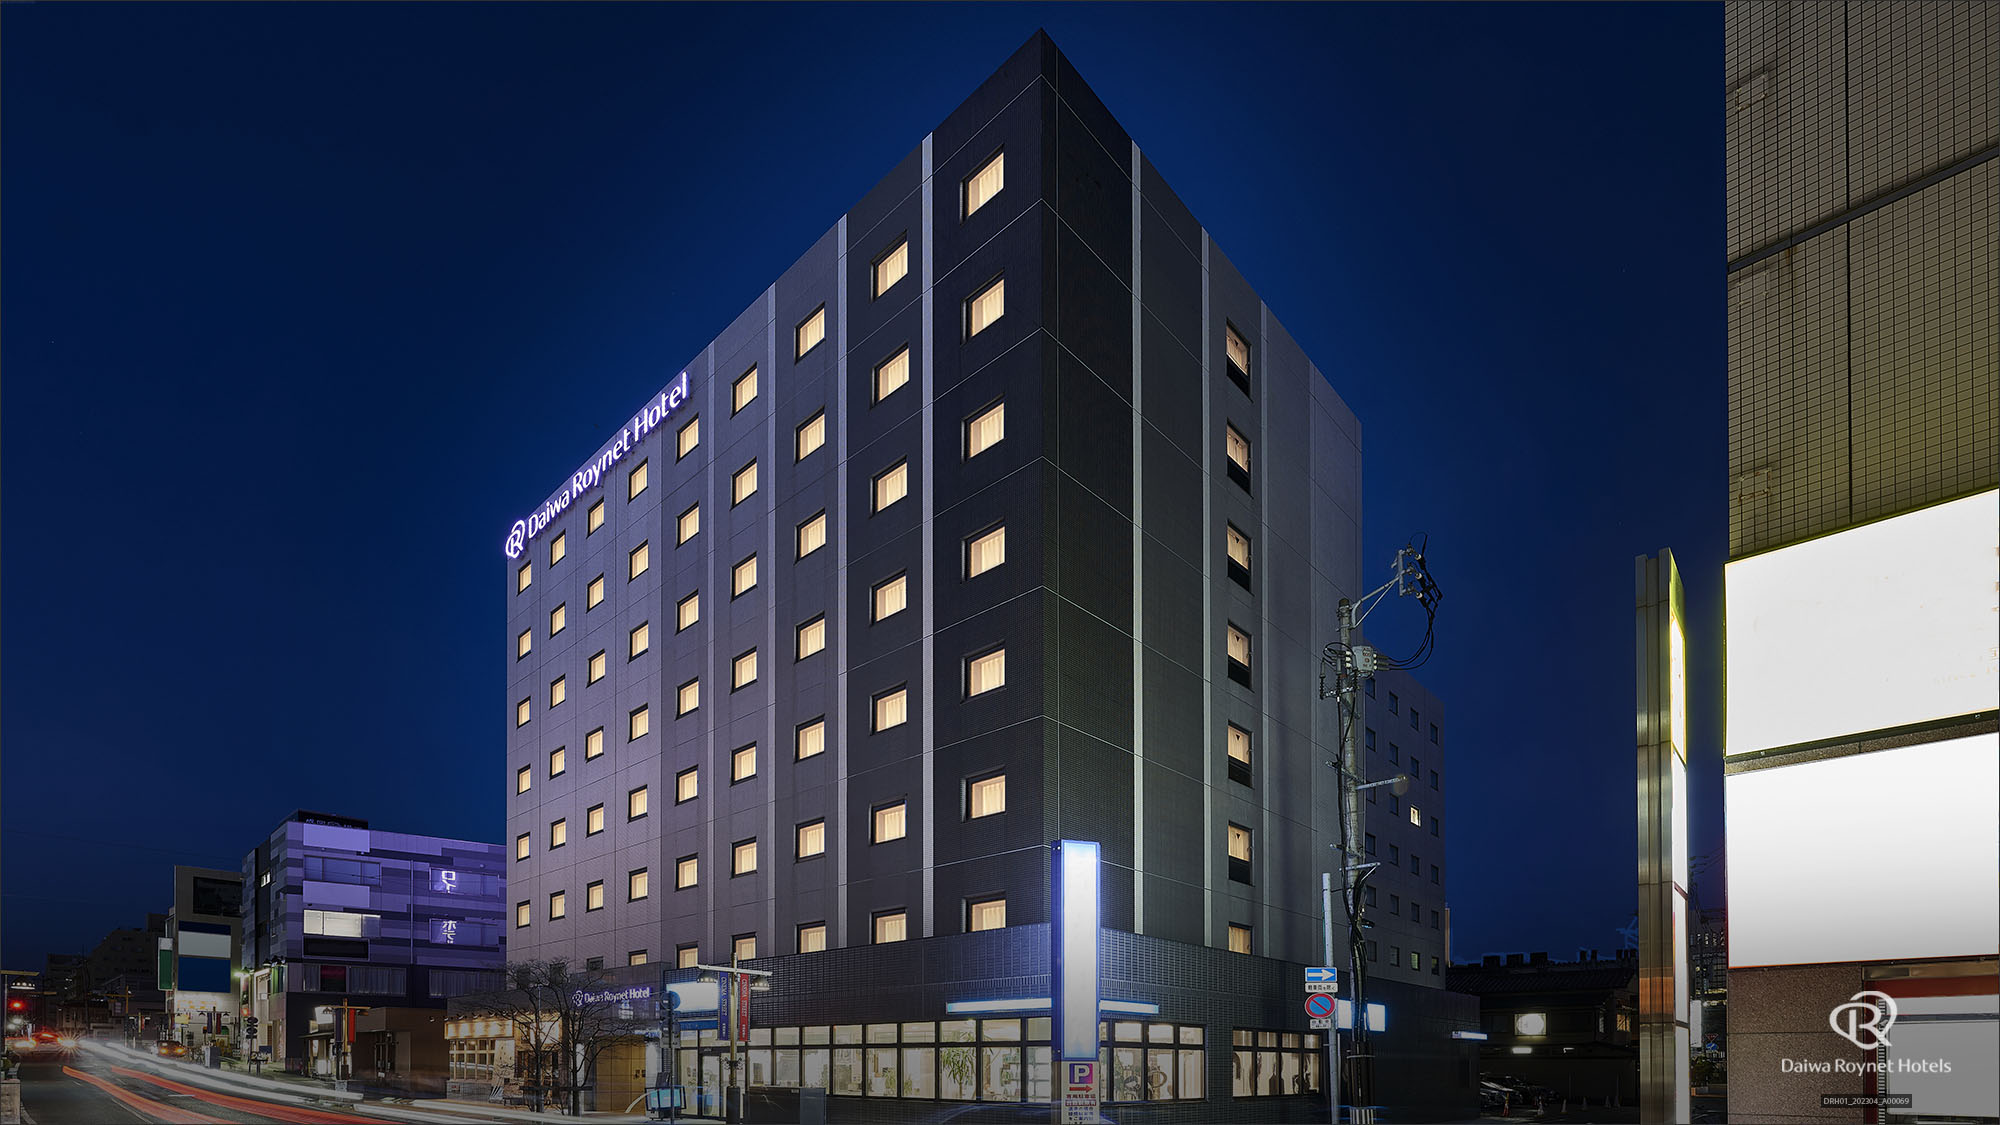 Daiwa Roynet Hotel Morioka